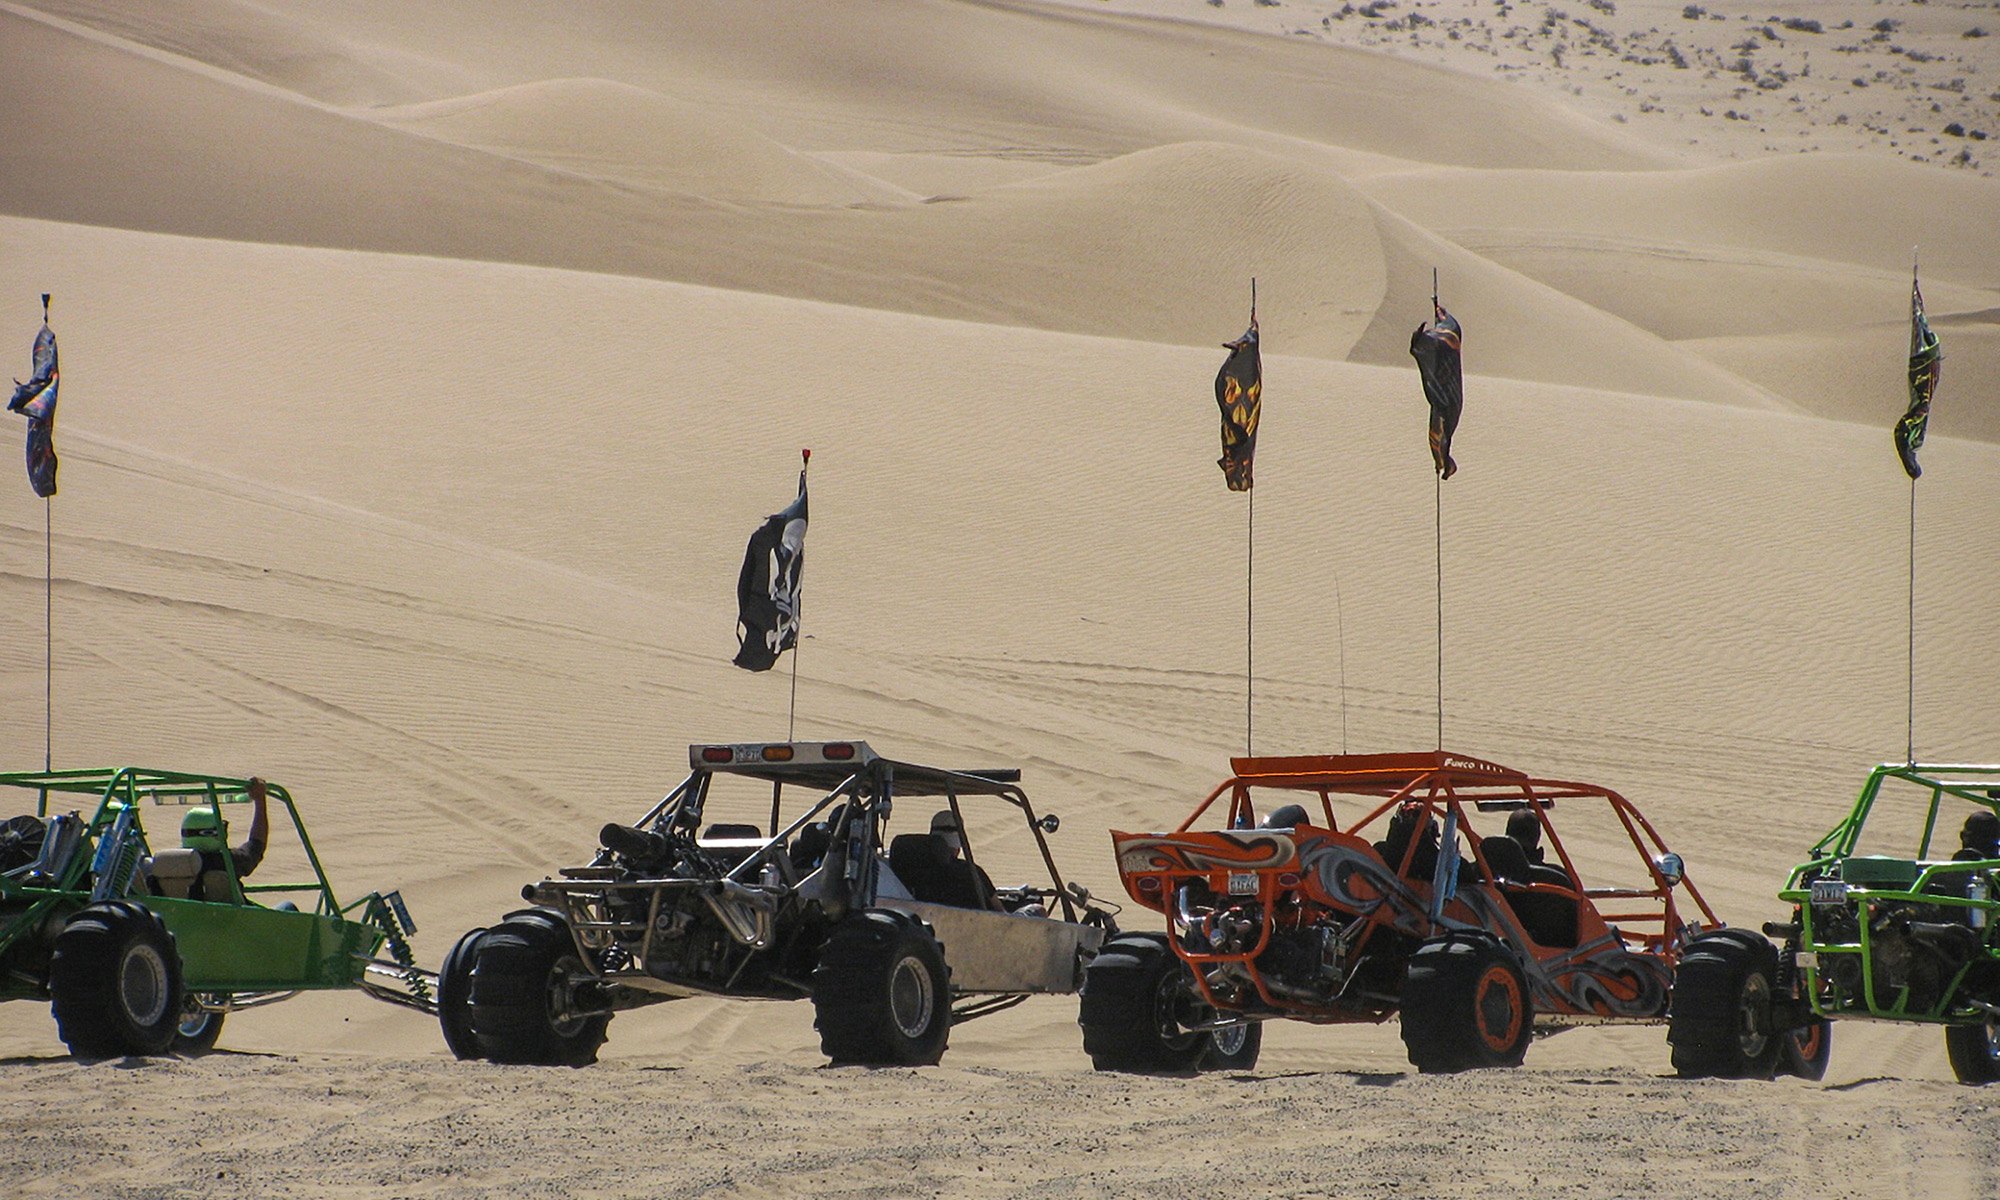 Algodrones Dunes with ATVs